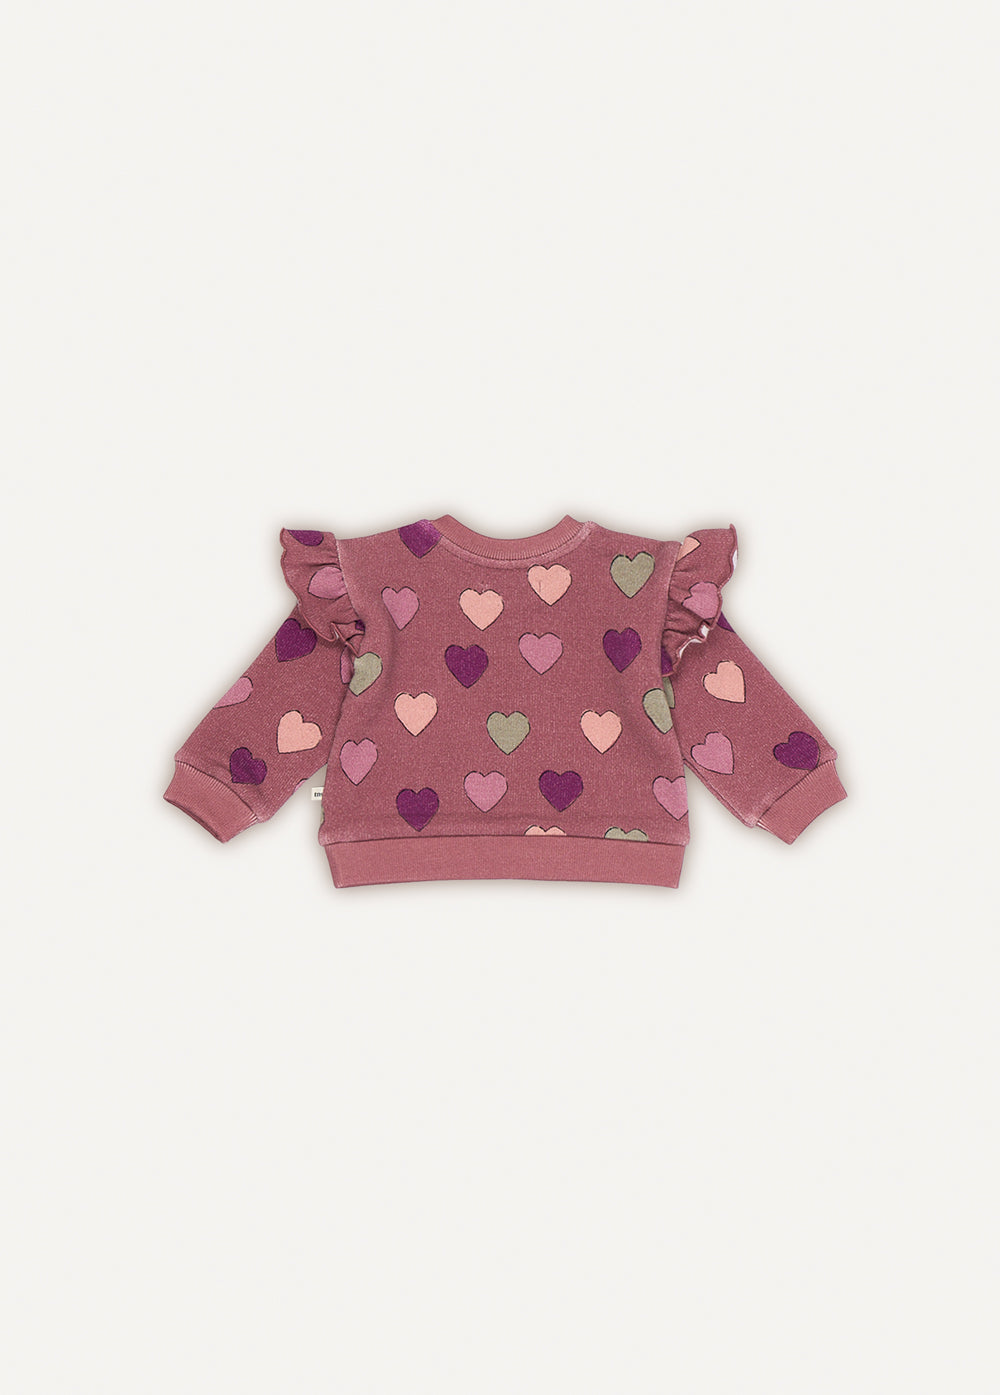 Christy Baby Sweatshirt Hearts_Sampling